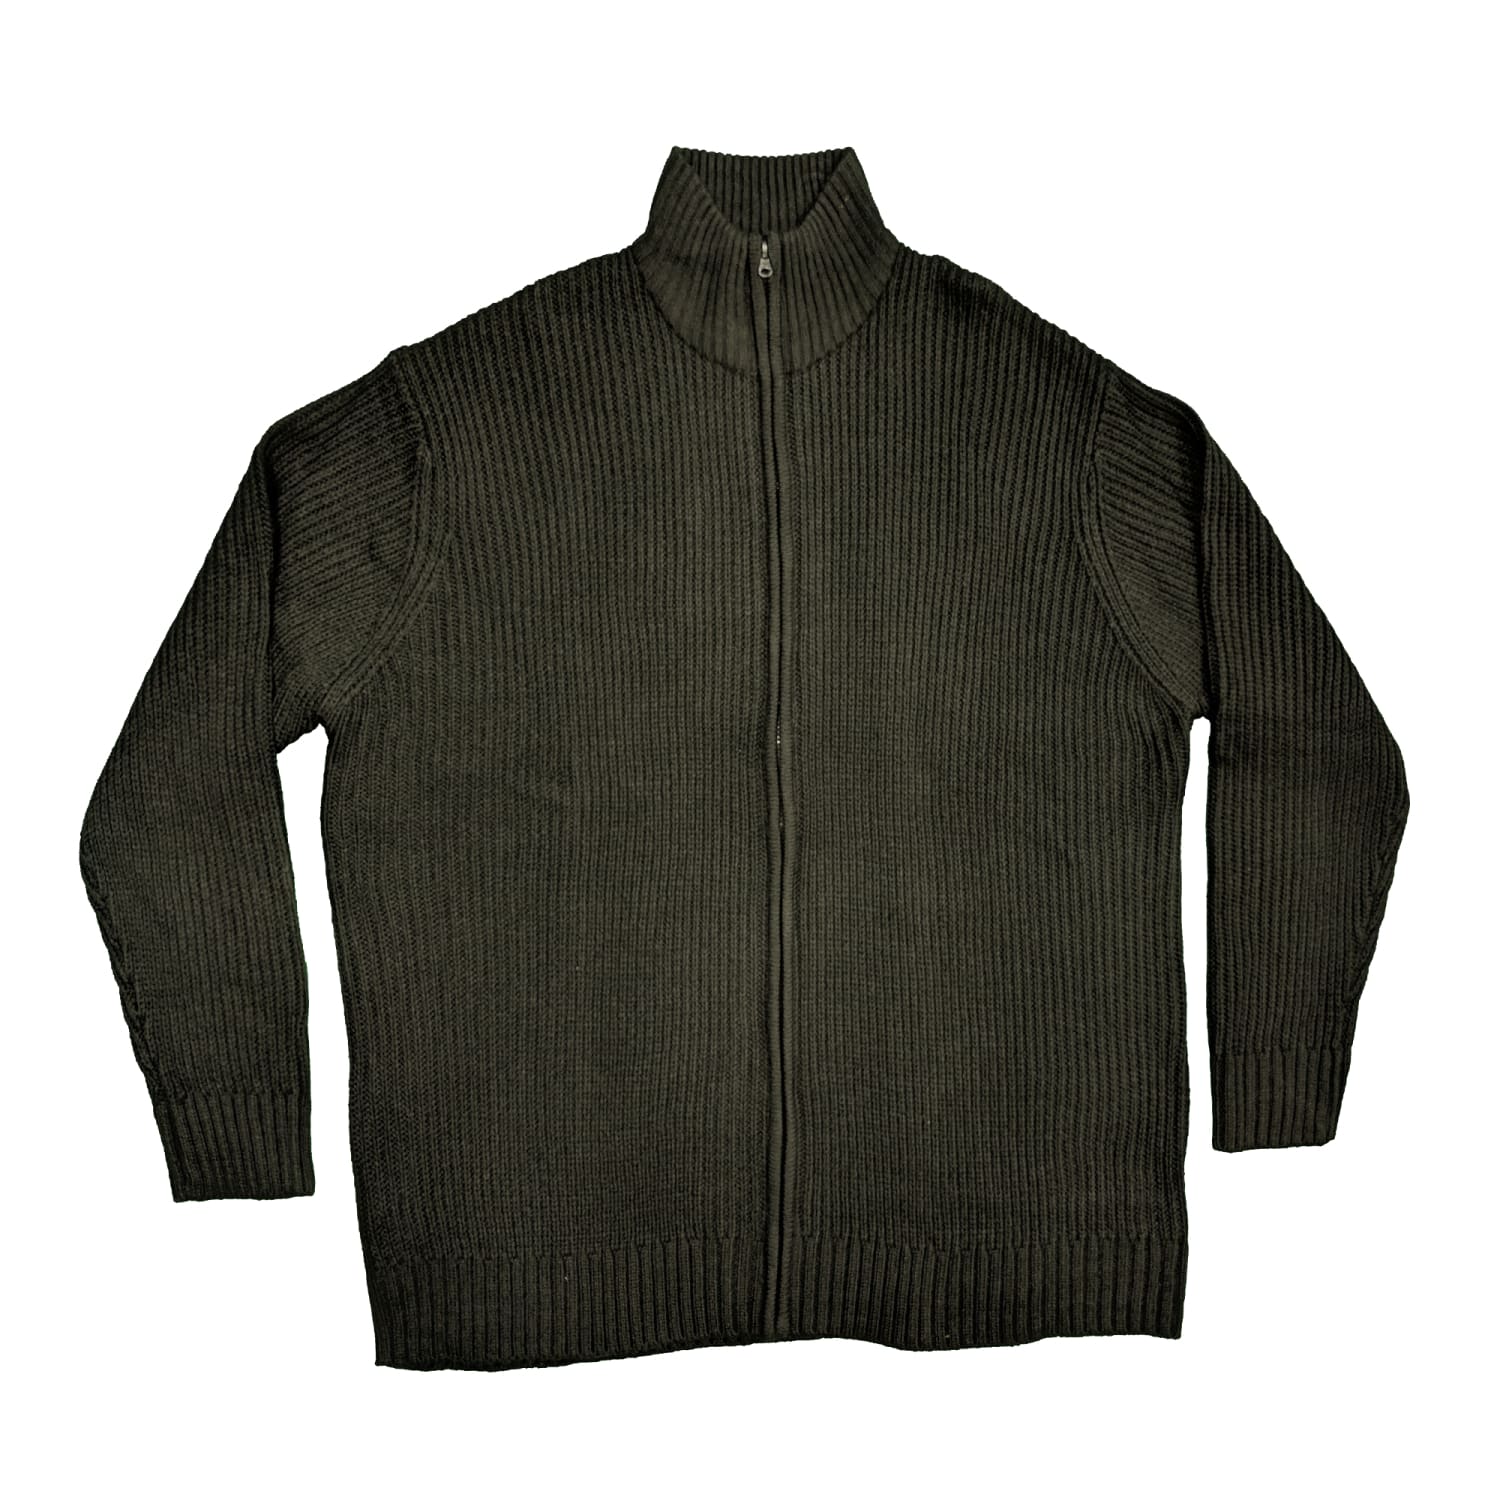 Metaphor Full Zip Sweater - 02426 - Black 1